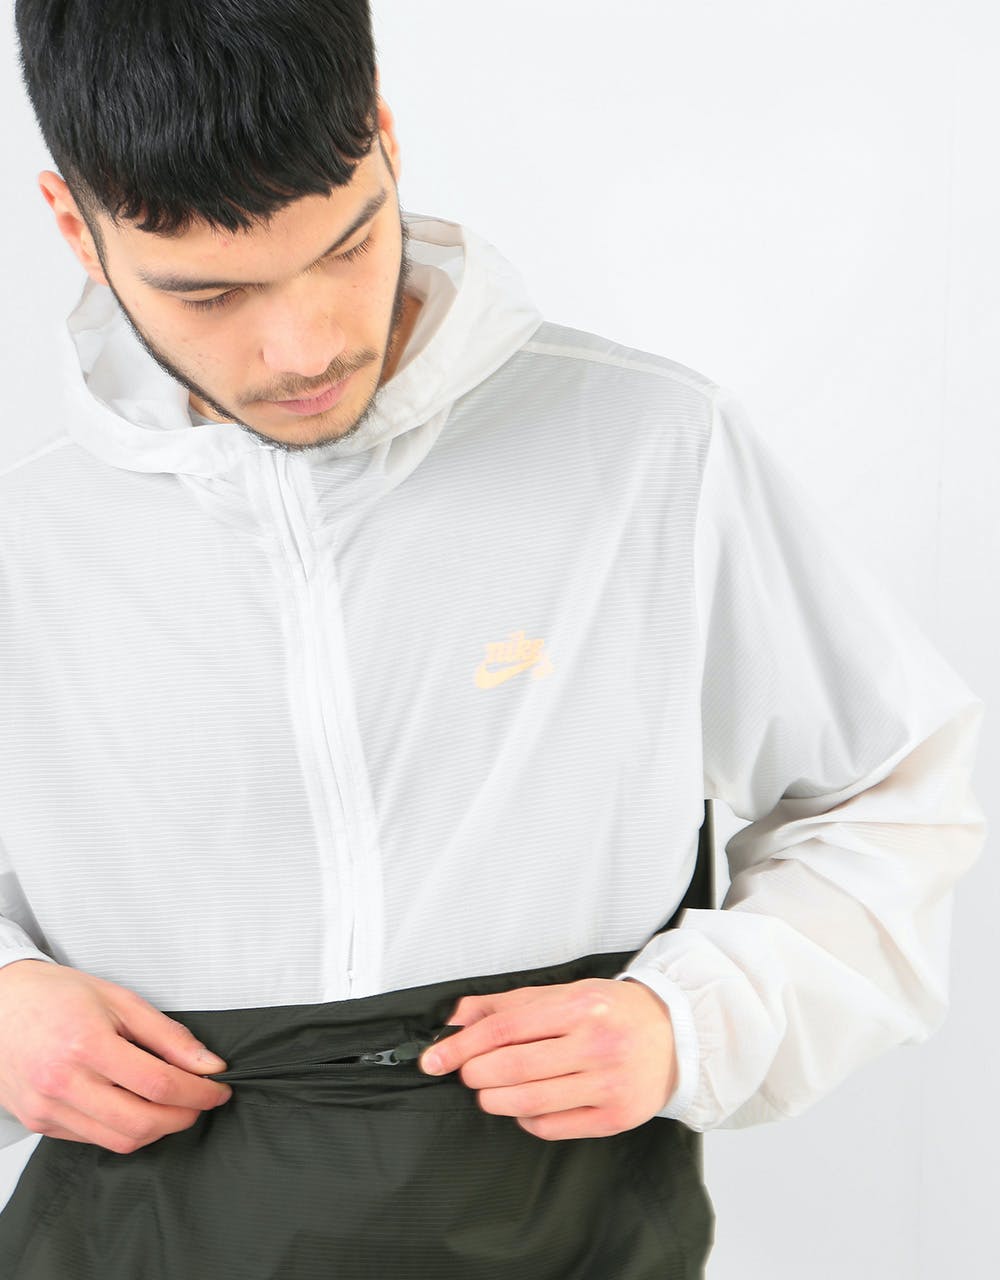 Nike SB Anorak Jacket - Vast Grey/Sequoia/Orange Pulse